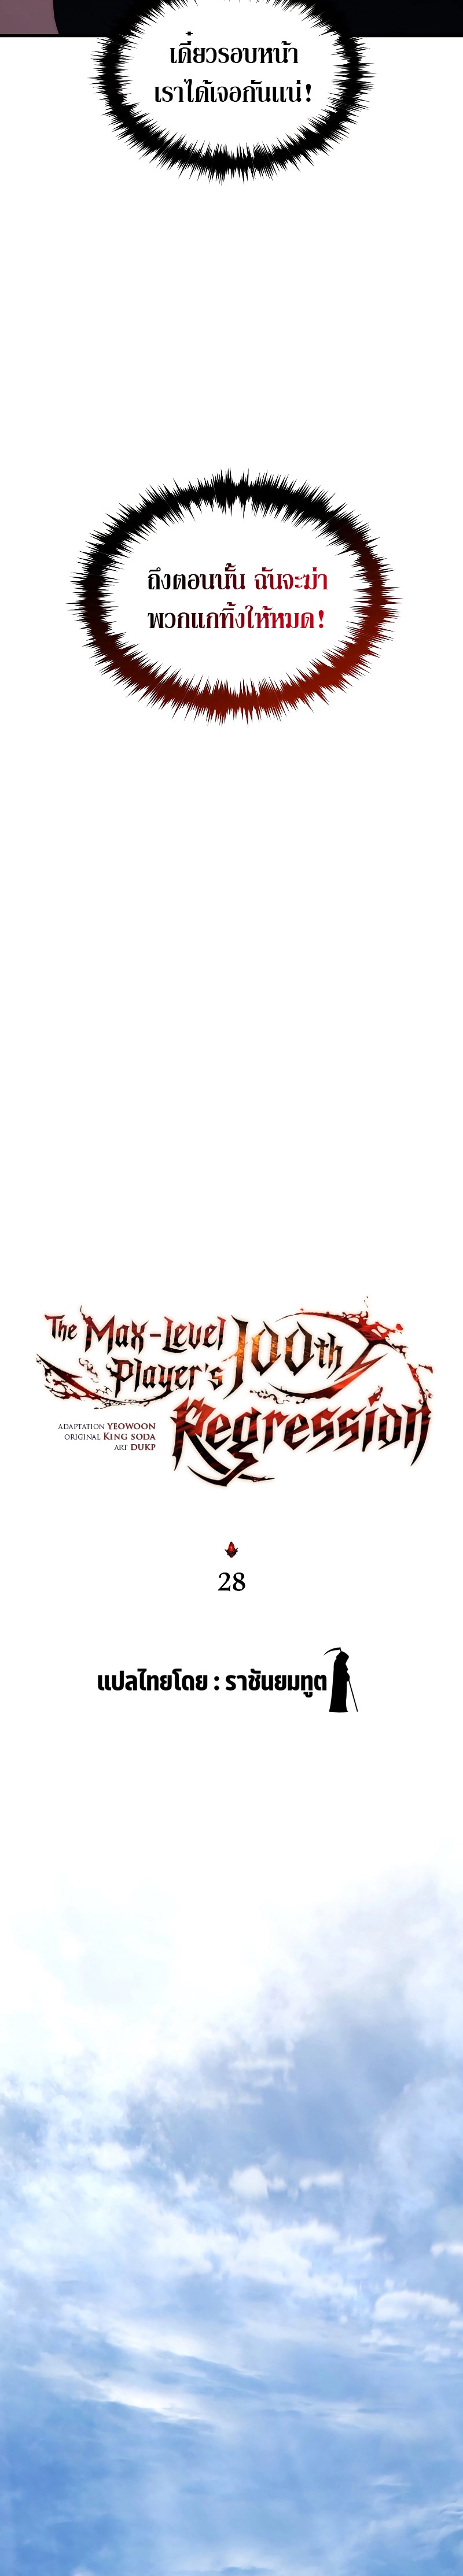 the max level player 100th regression 28.09